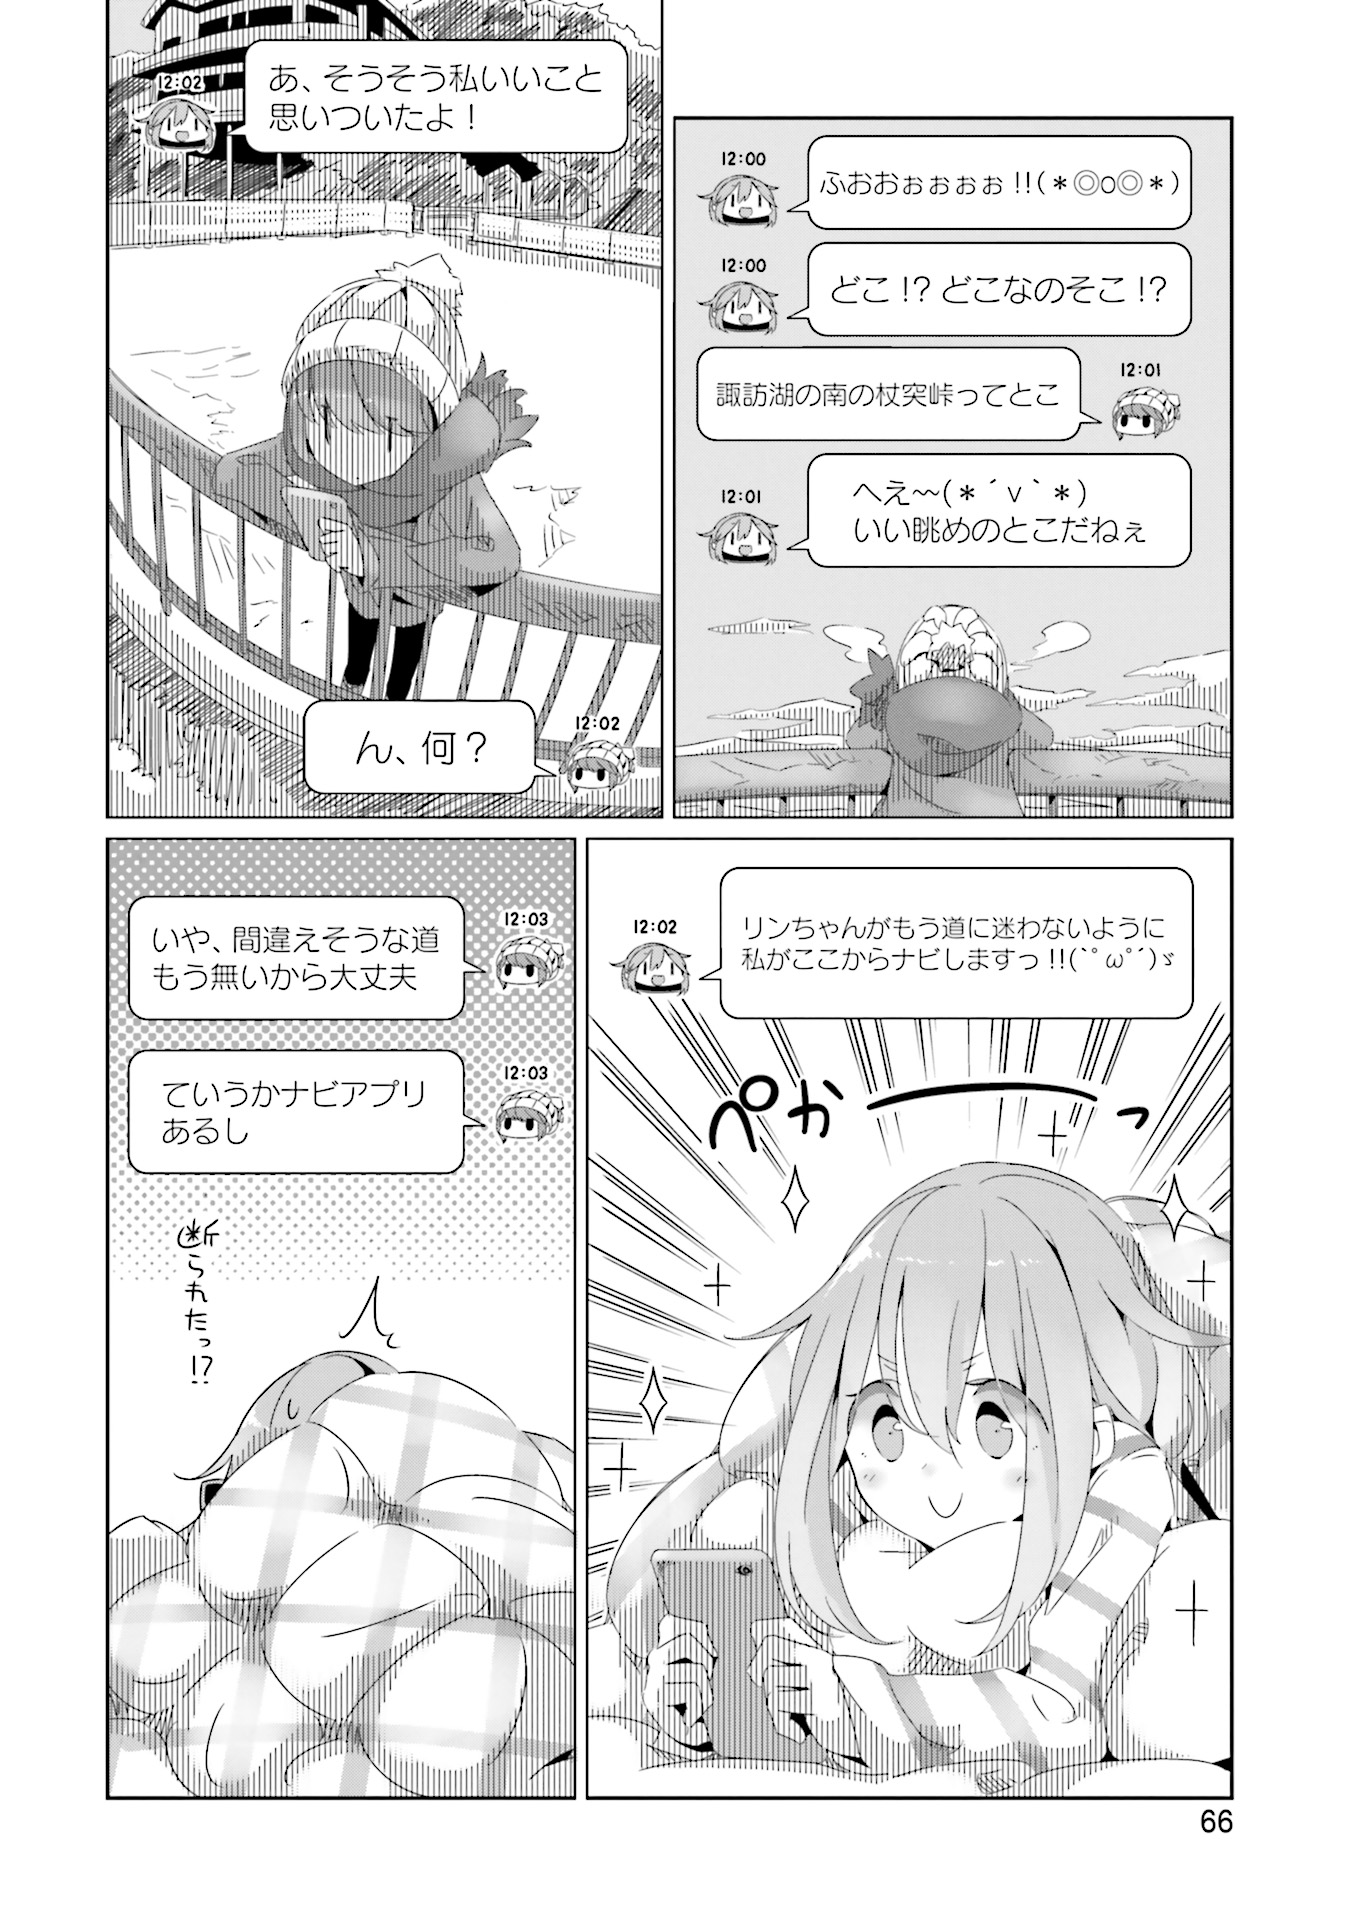 Yuru Camp - Chapter 16 - Page 4